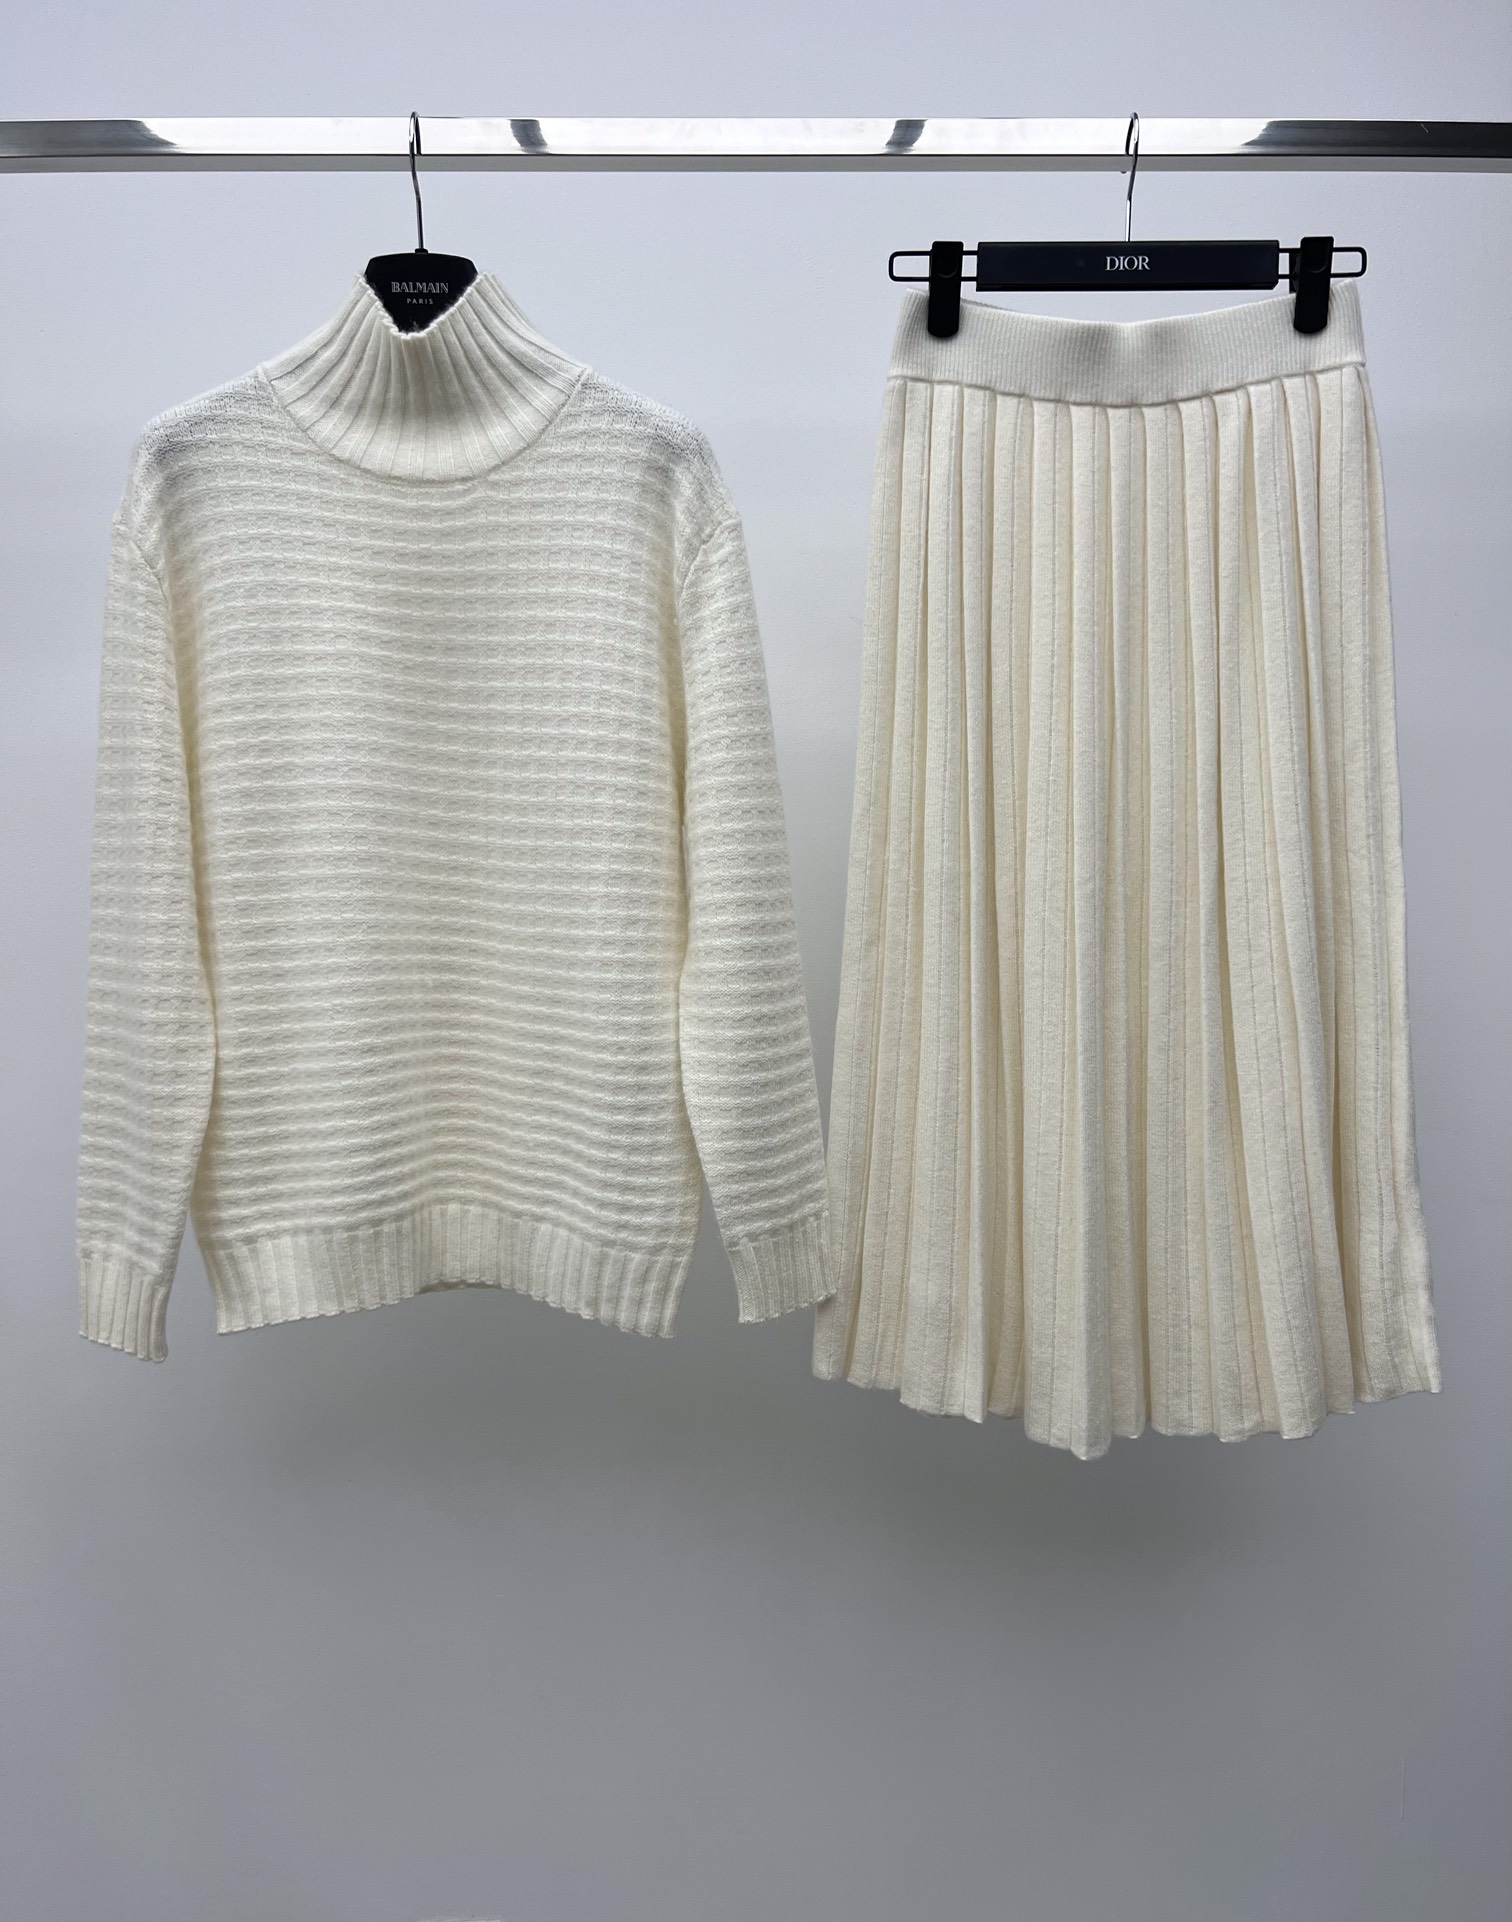 Prada Clothing Sweatshirts White Weave Cashmere Knitting Wool Fall/Winter Collection